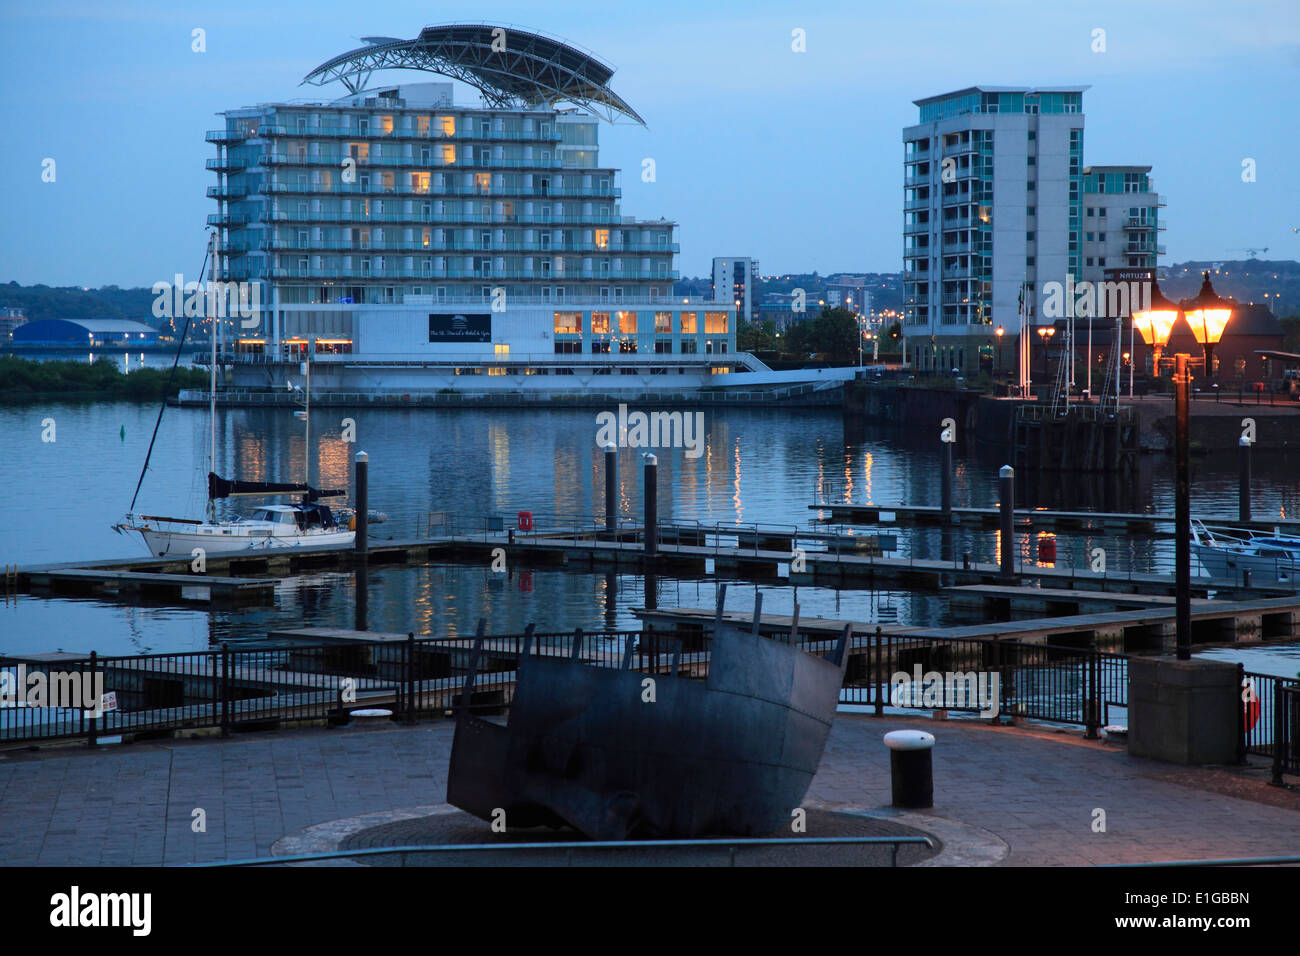 UK, Wales, Cardiff, Bay, St David's Hotel, general view, skyline, Stock Photo